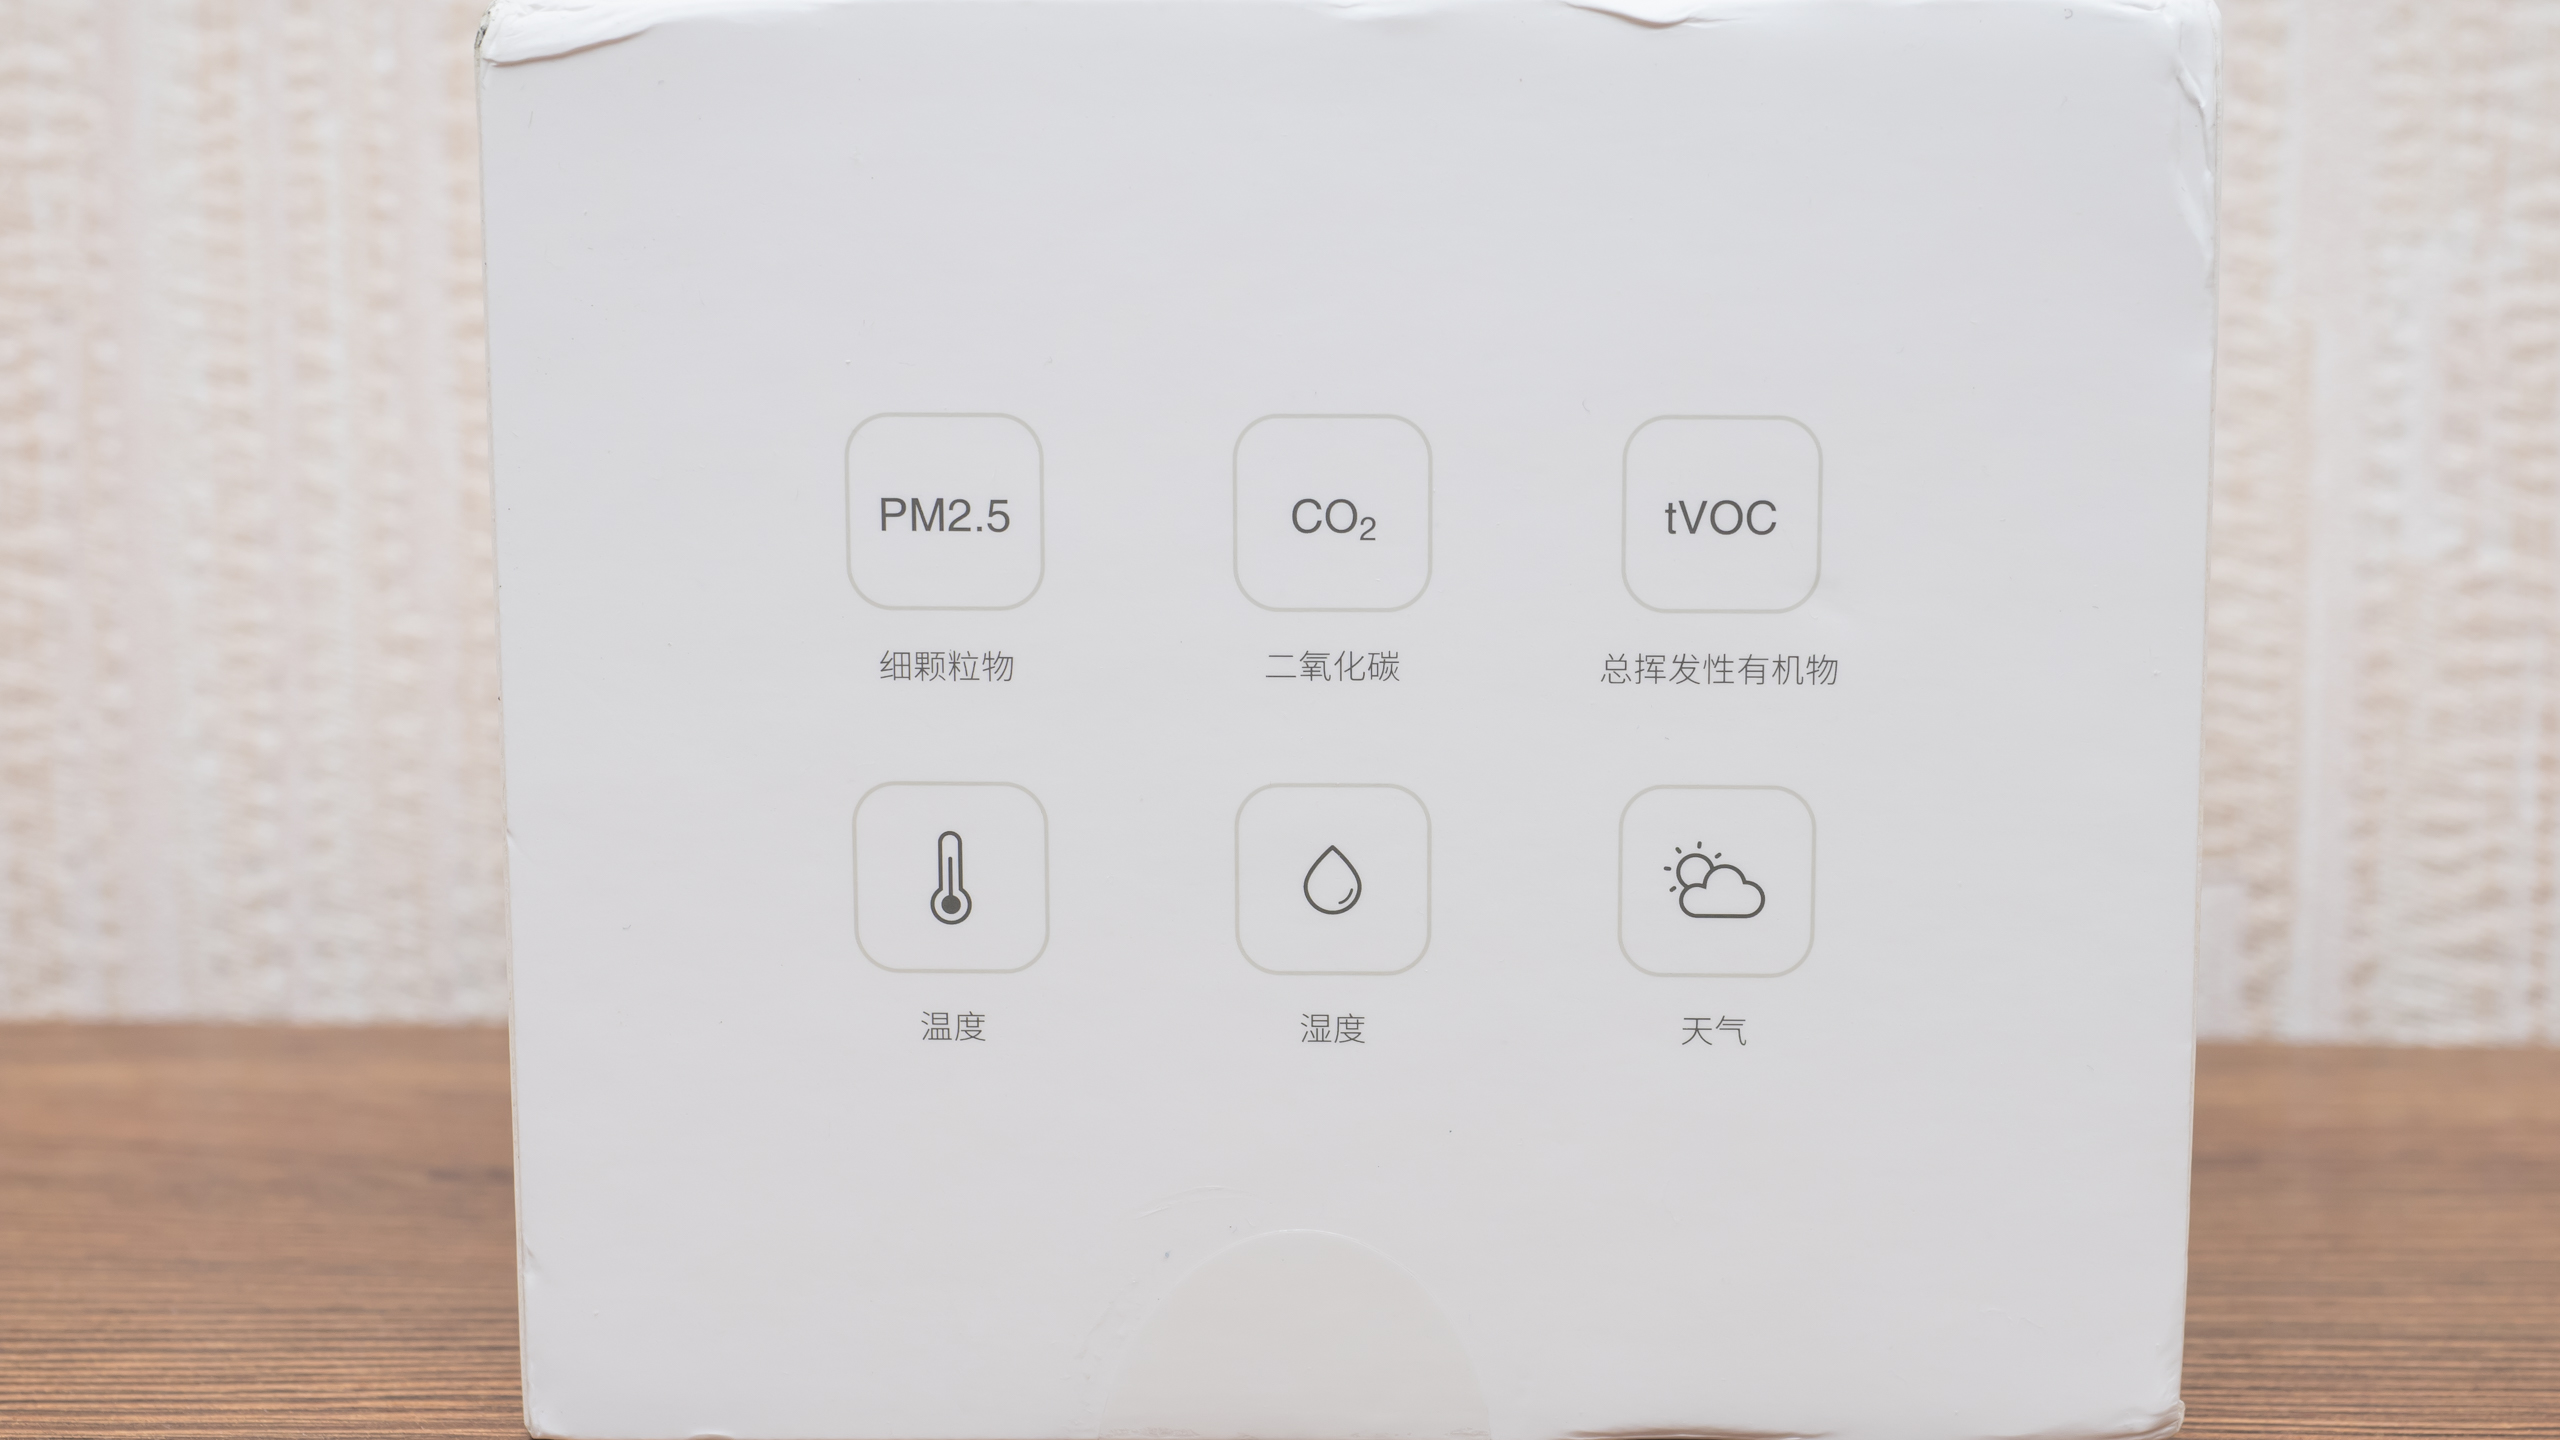 Xiaomi clear grass. Aqara монитор качества воздуха. TVOC Aqara. Aqara Air quality Monitor. Aqara TVOC AAQS-s01.